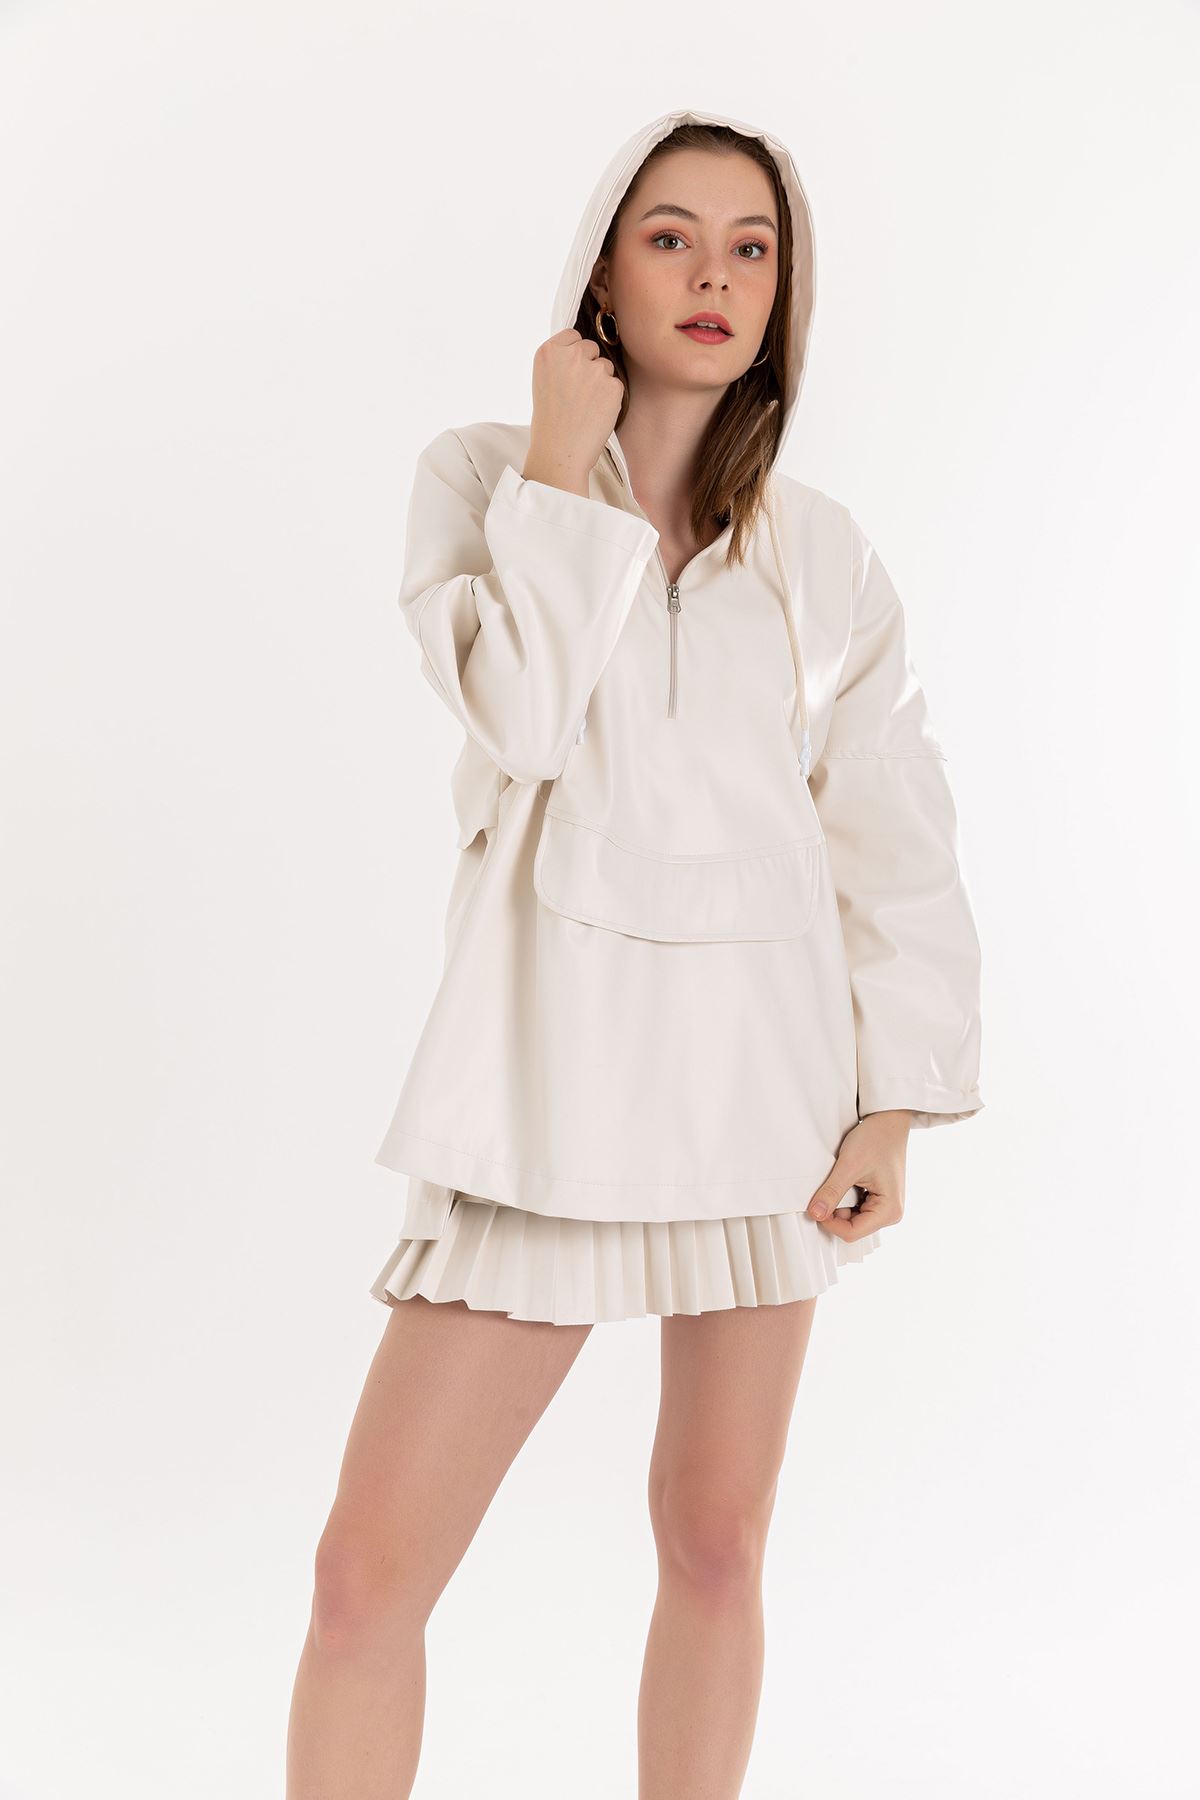 Zara Leather Fabric Long Sleeve Hooded Long Oversize Women Sweatshirt - Ecru